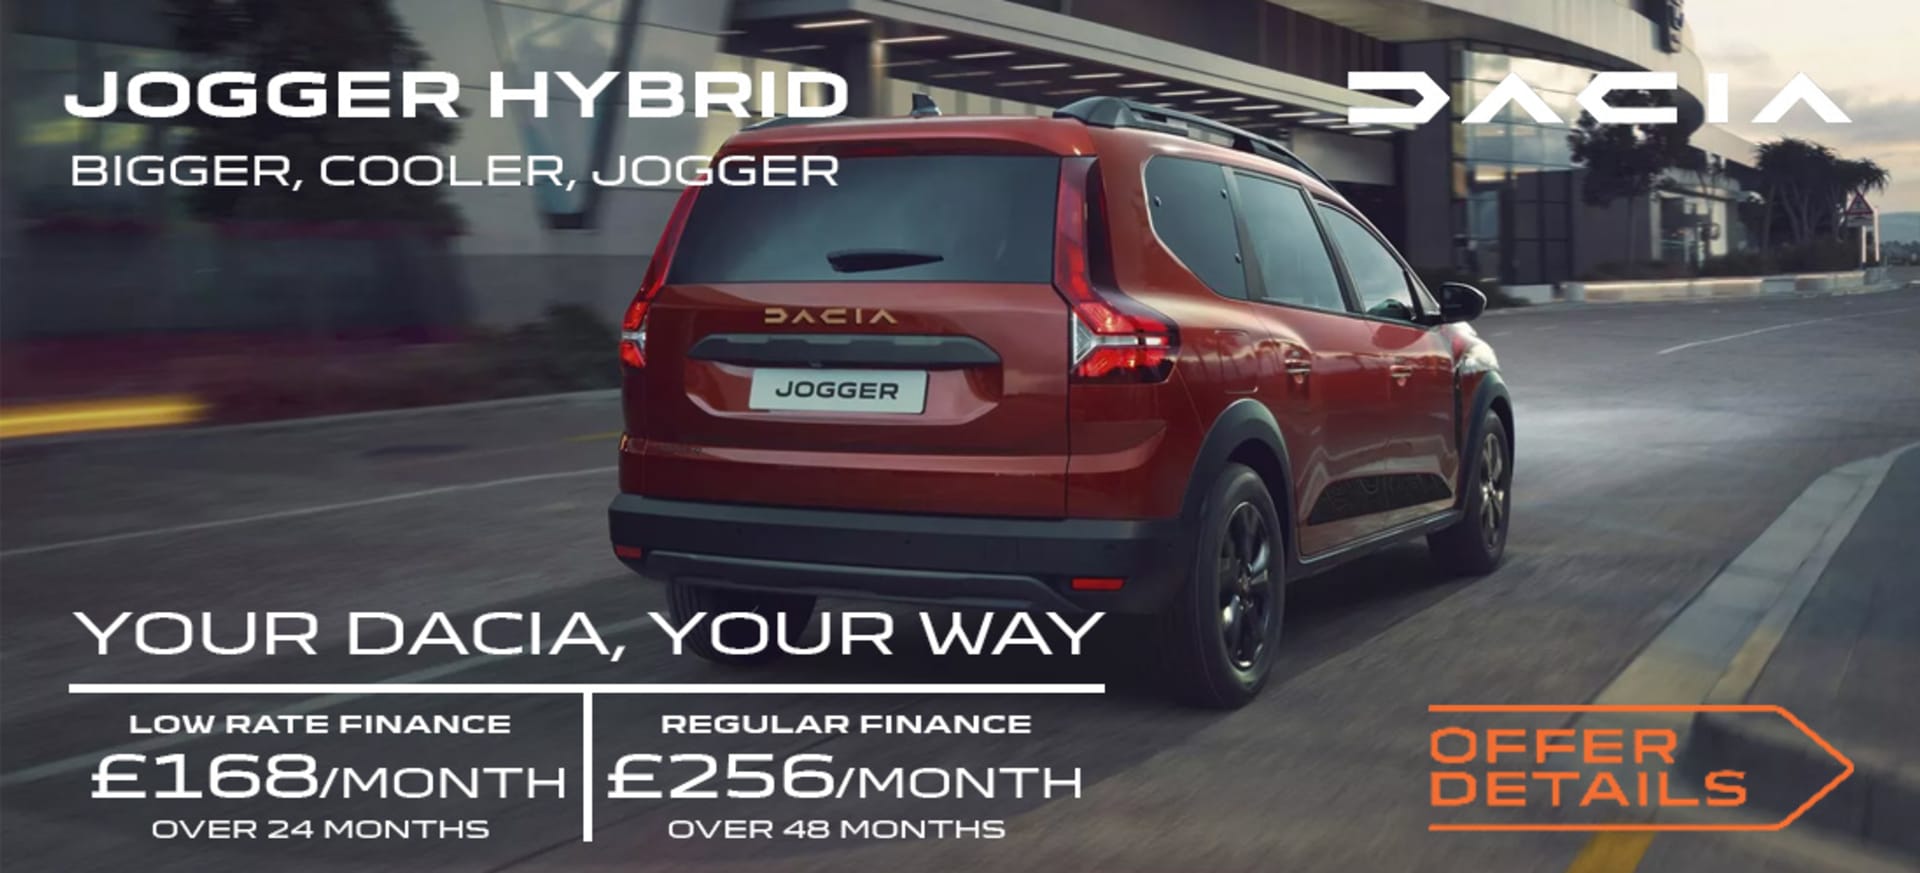 Dacia Jogger Hybrid Offers